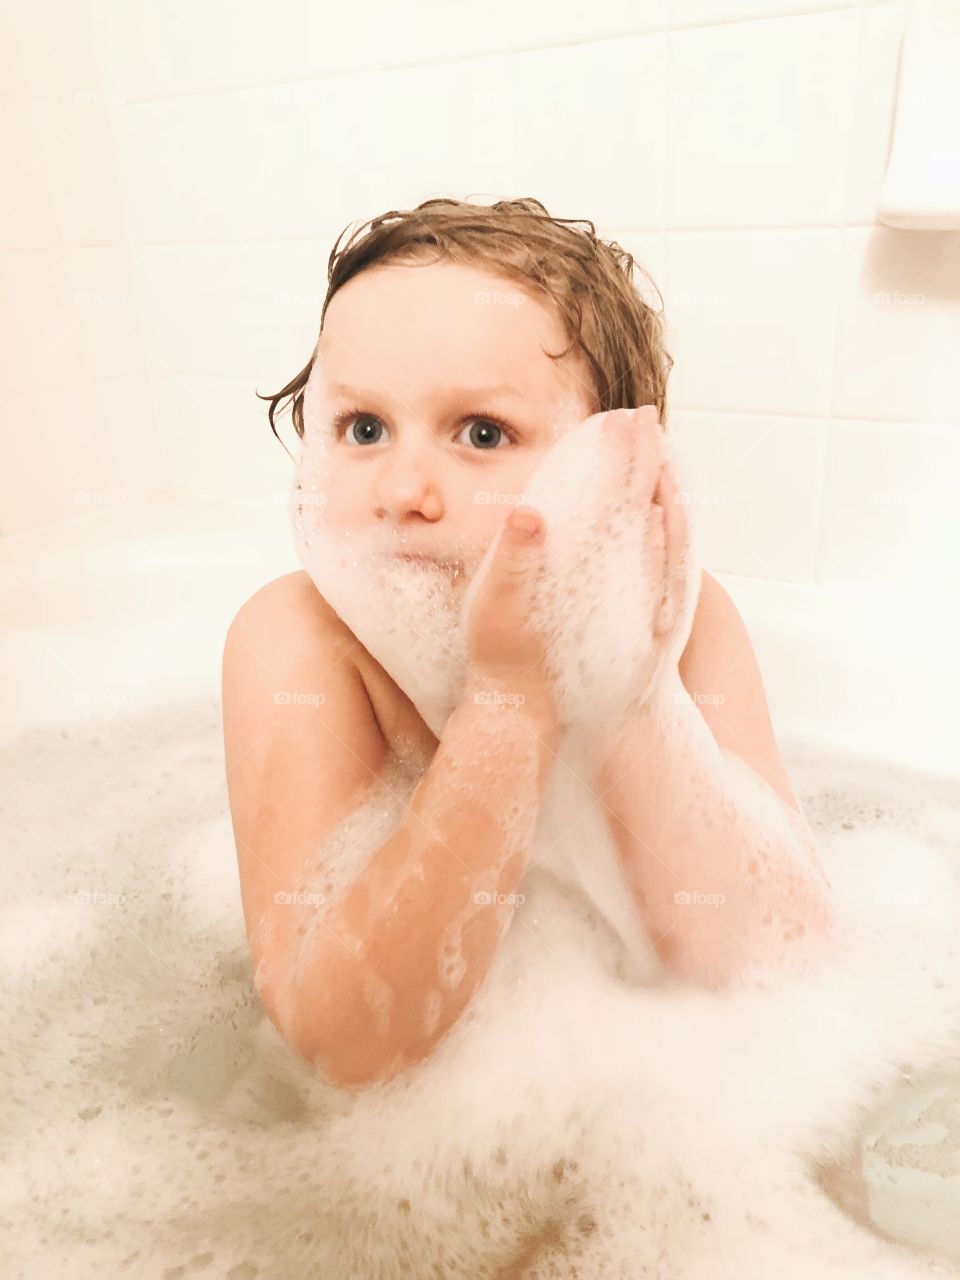 Child Taking a Bath